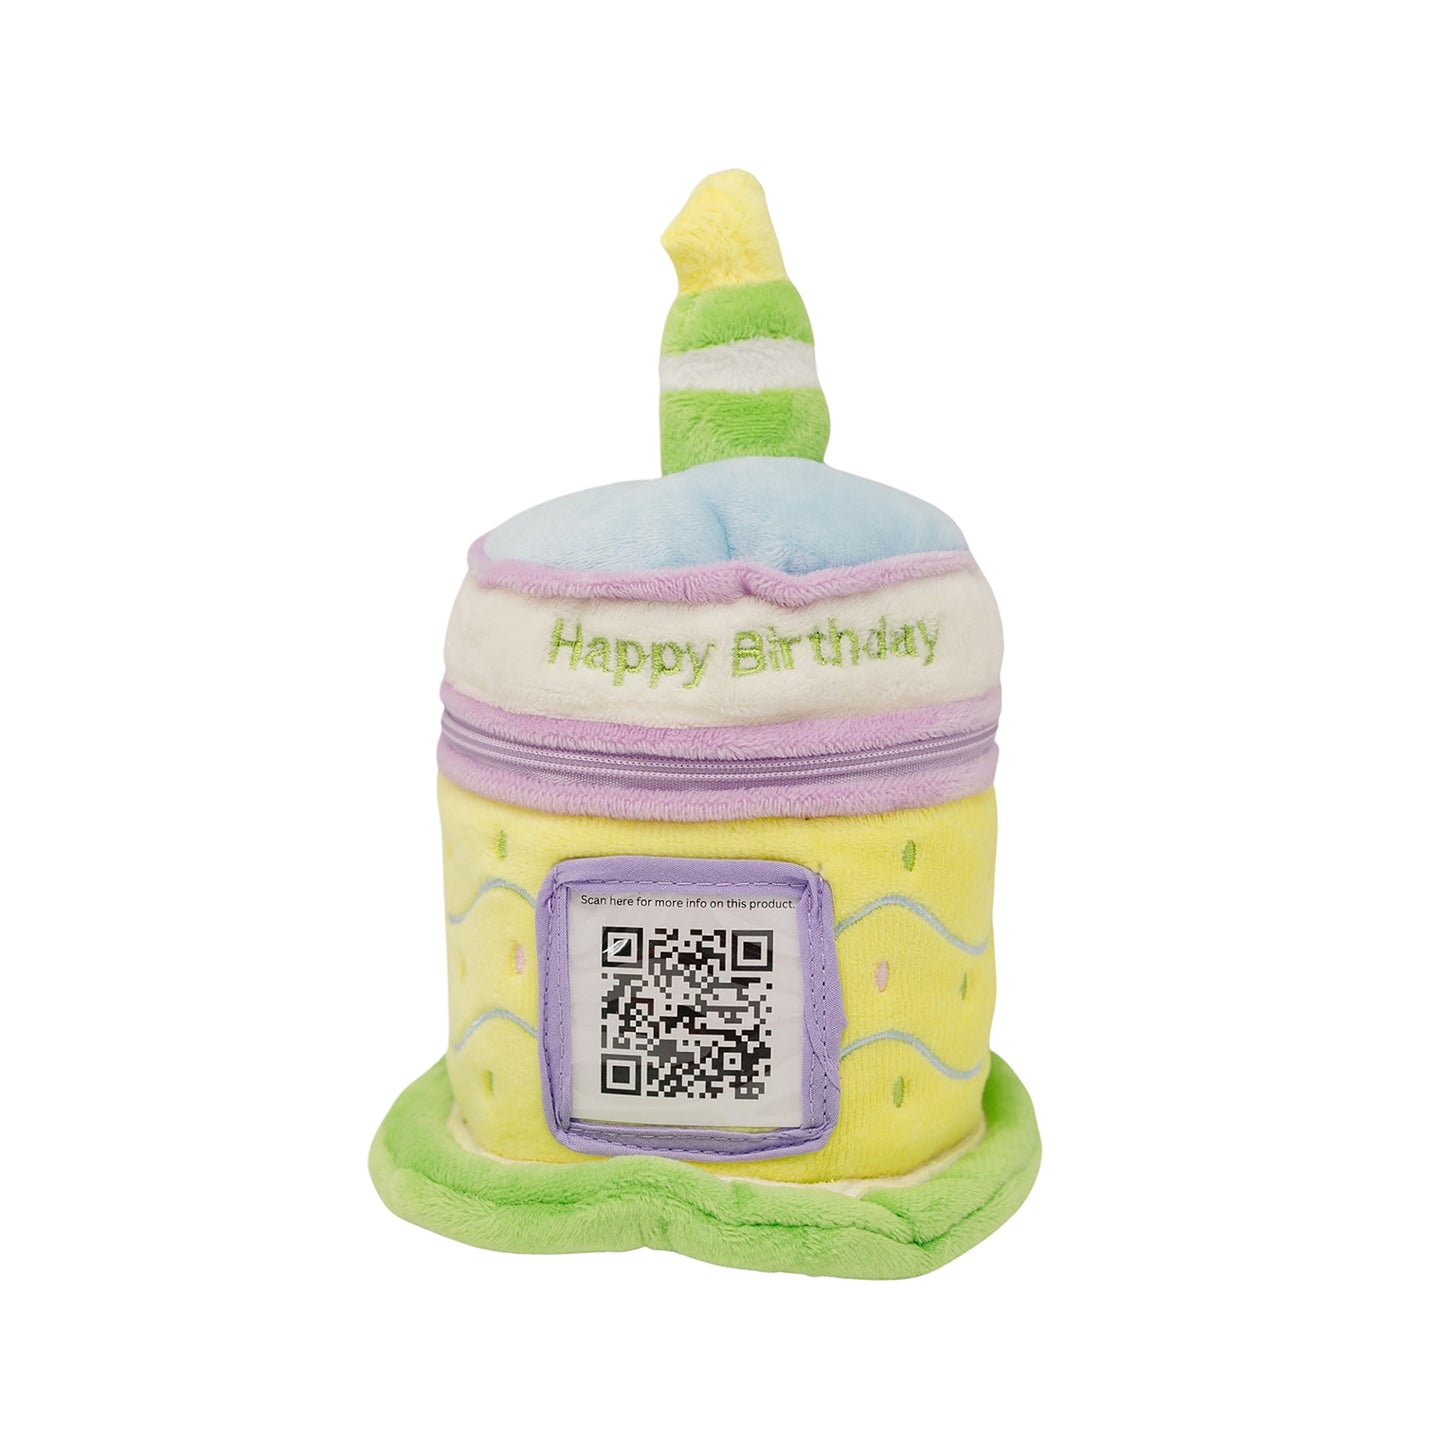 Happy Birthday Playset for Baby